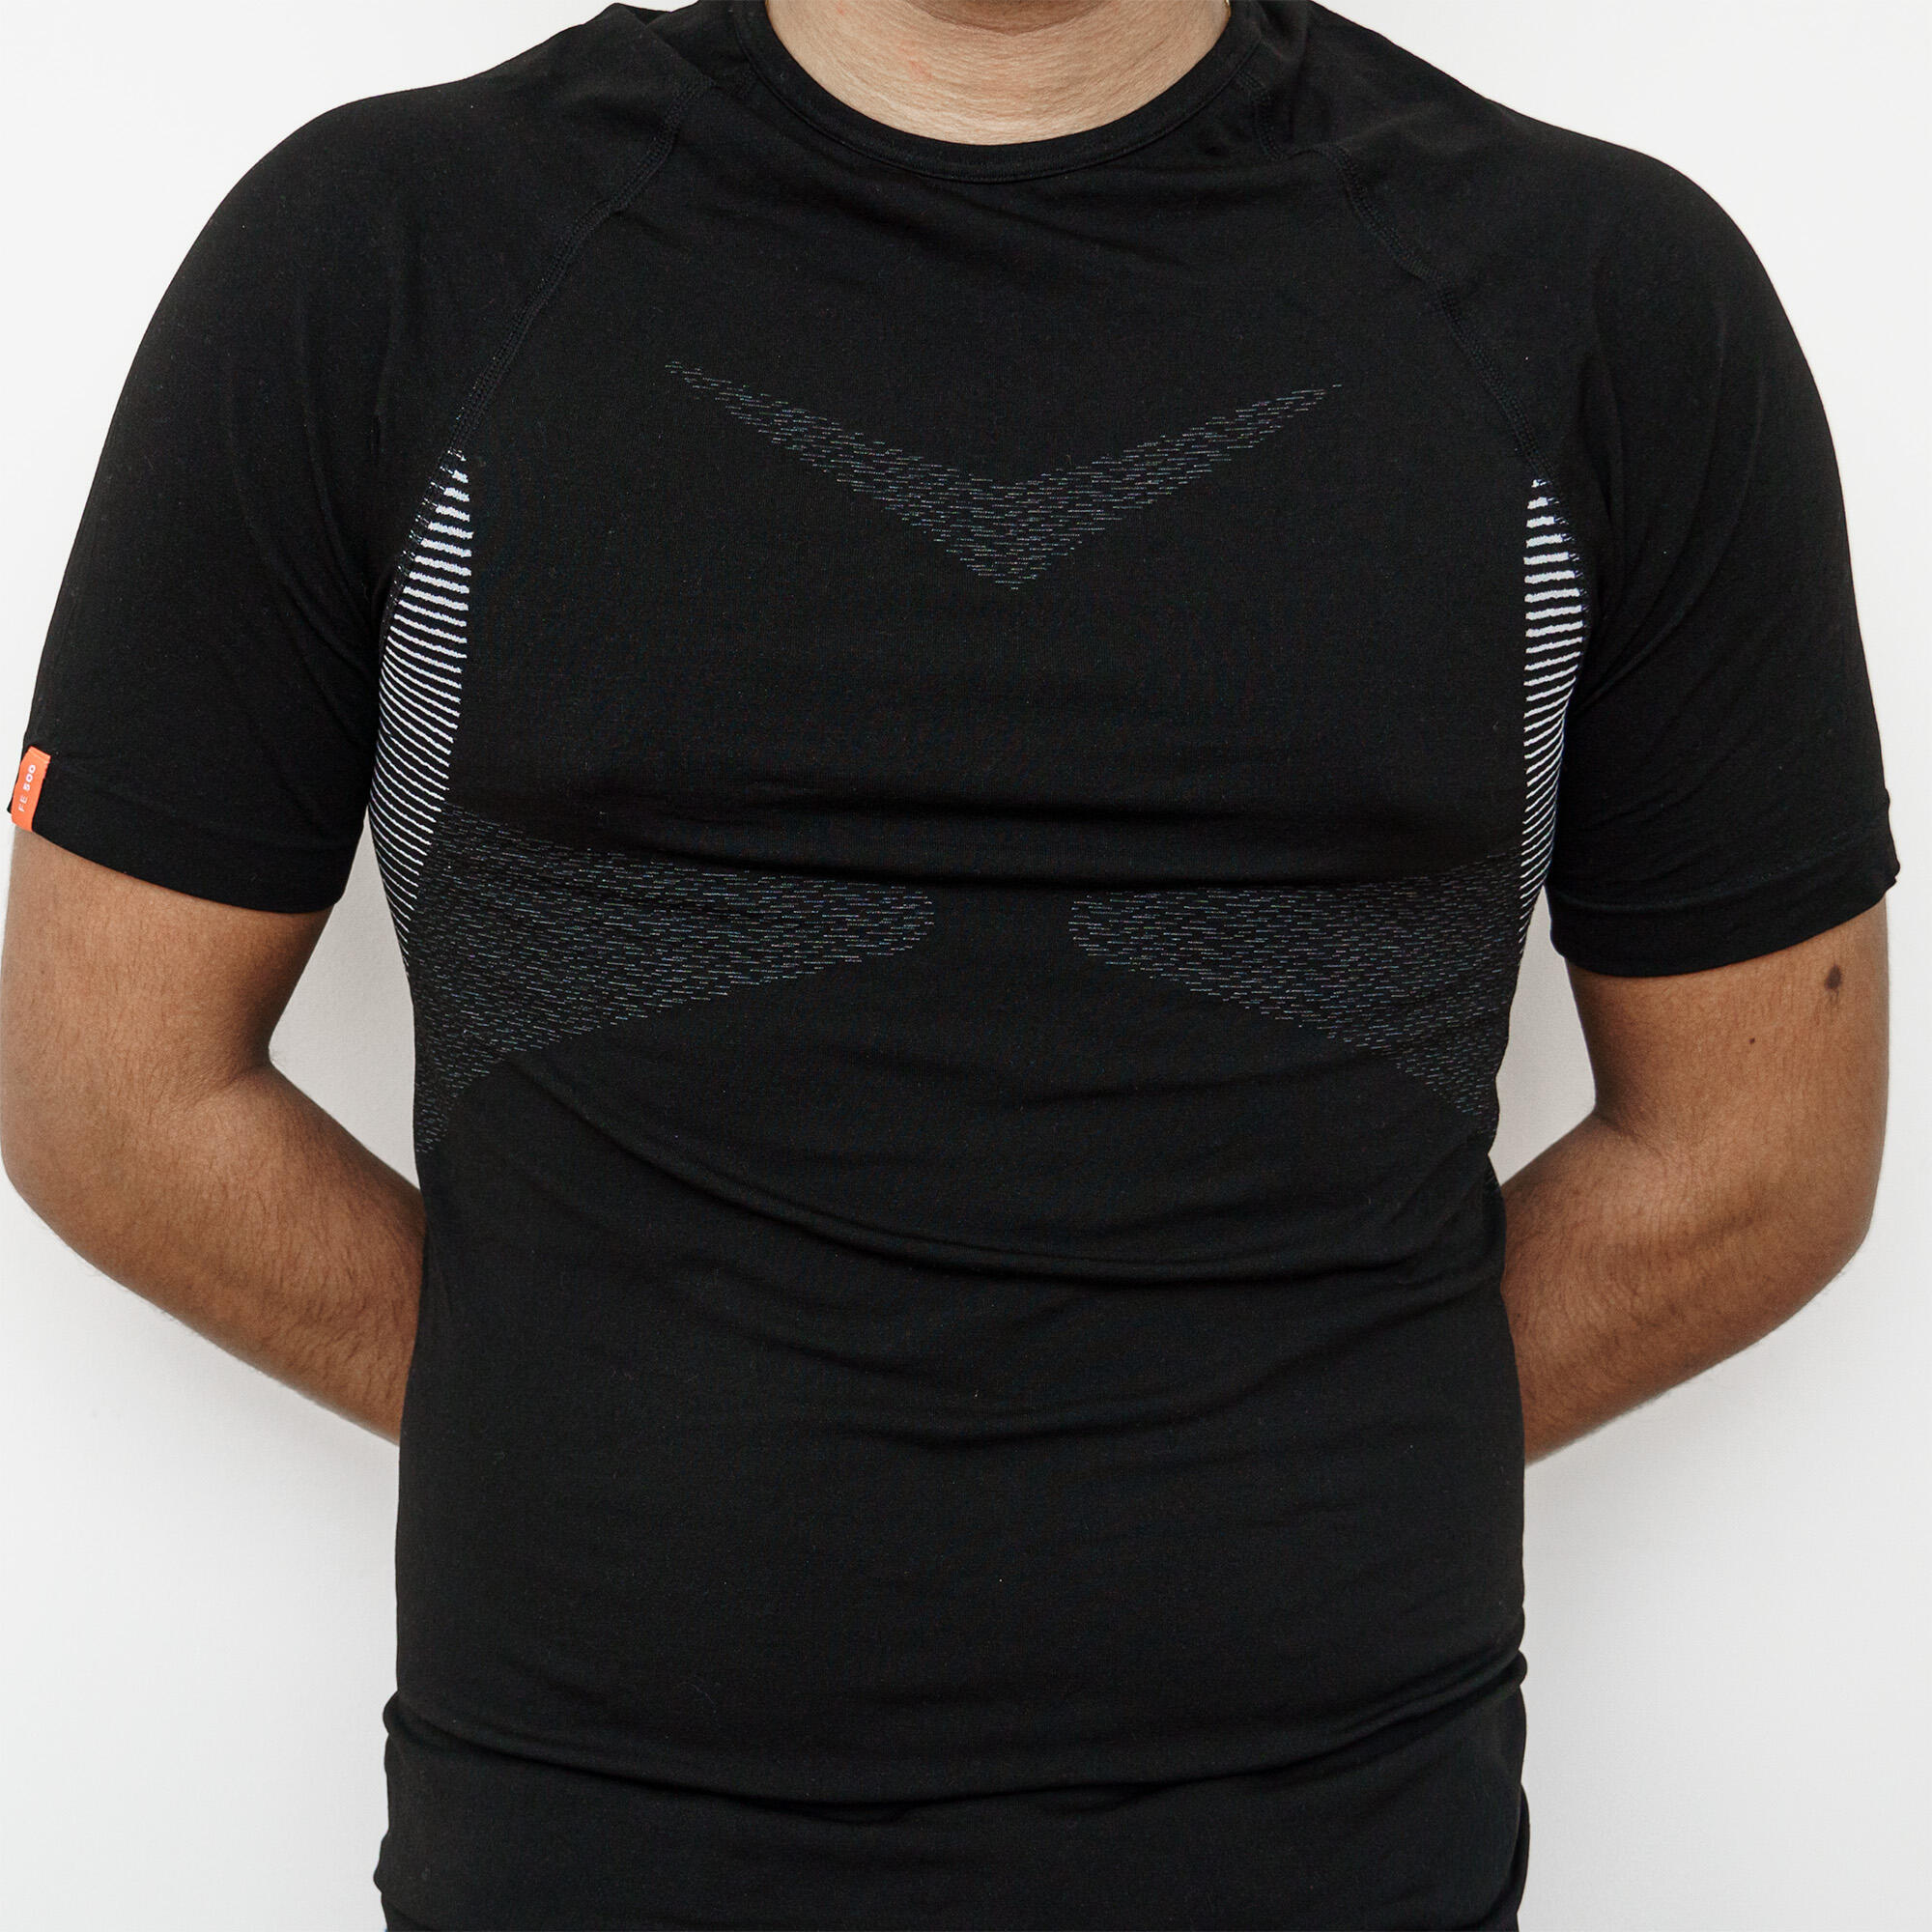 Decathlon | T-shirt tecnica da scherma nera |  Fenc'it